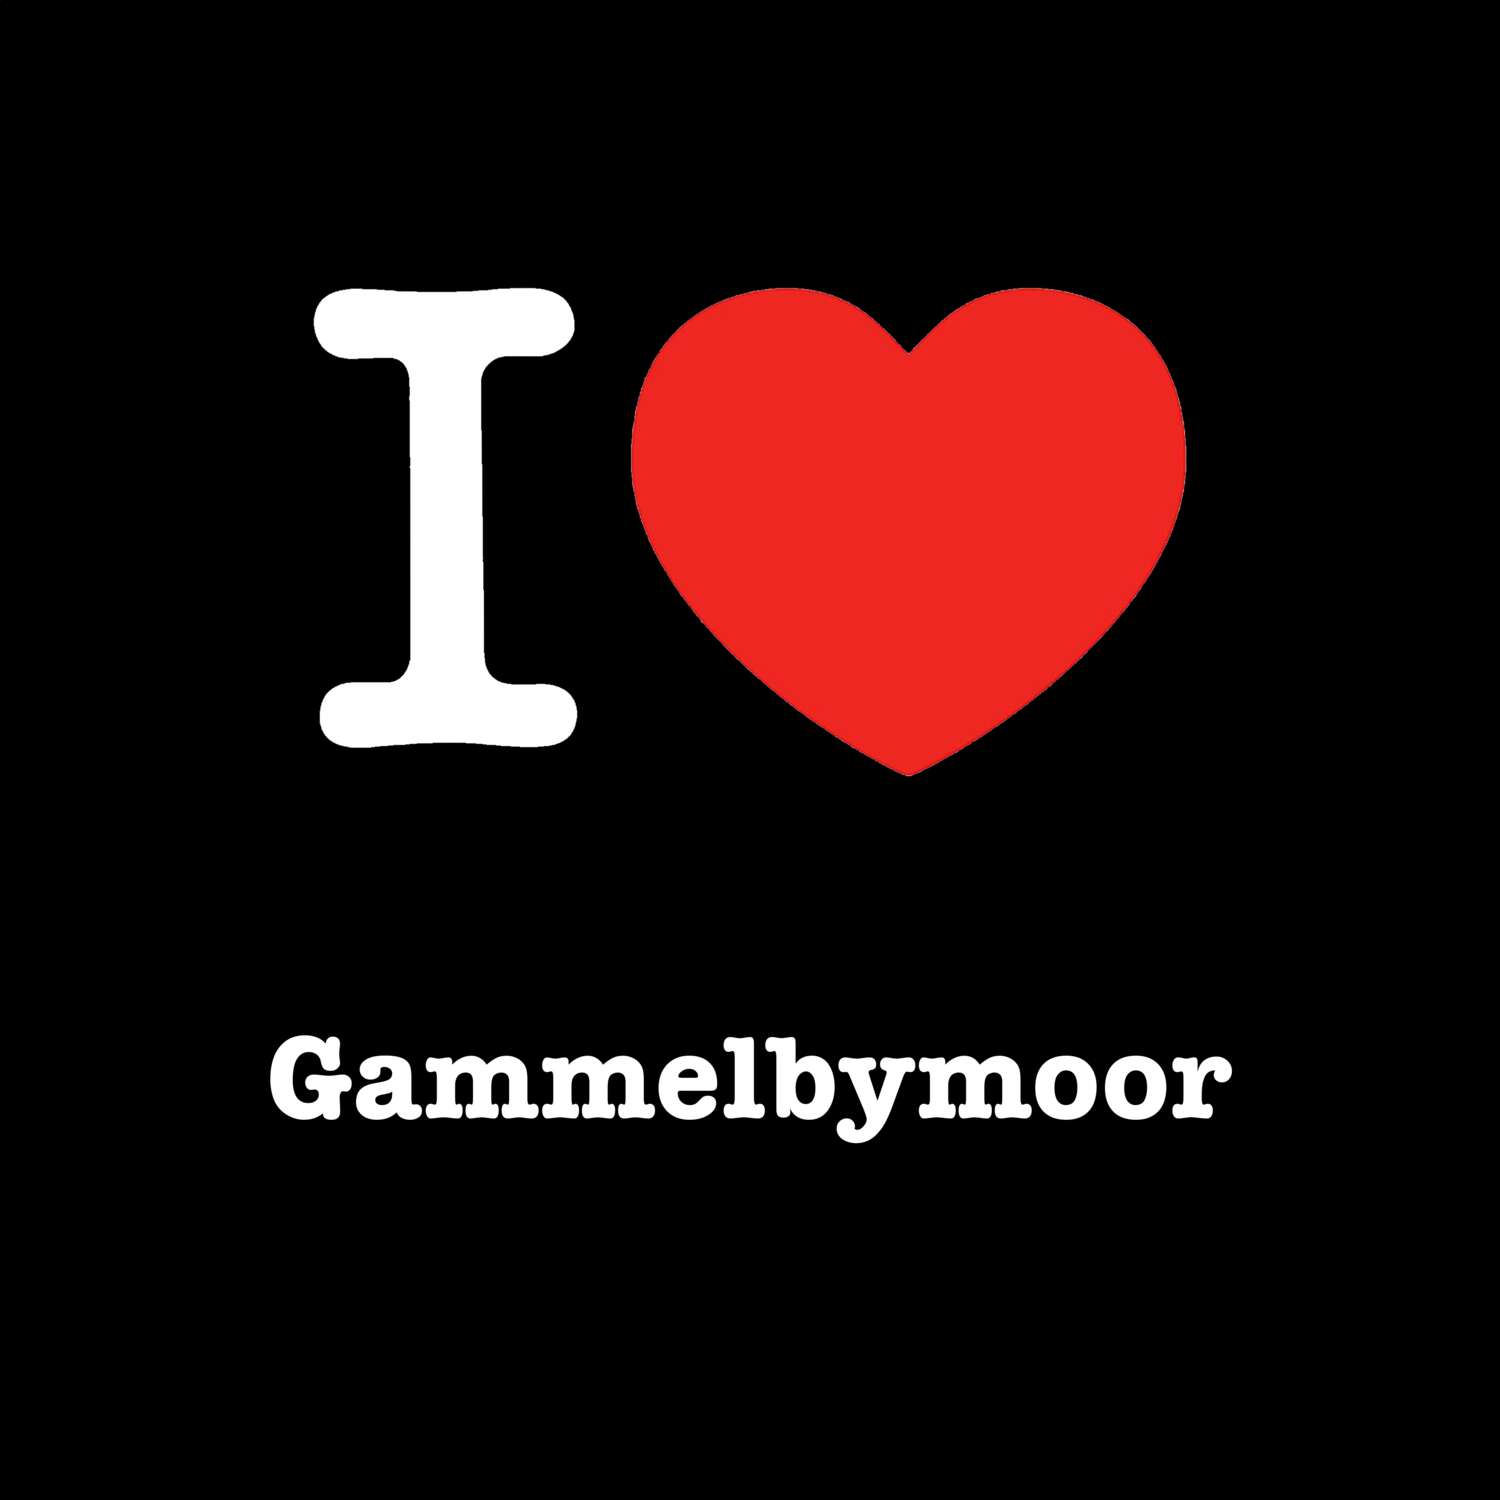 Gammelbymoor T-Shirt »I love«